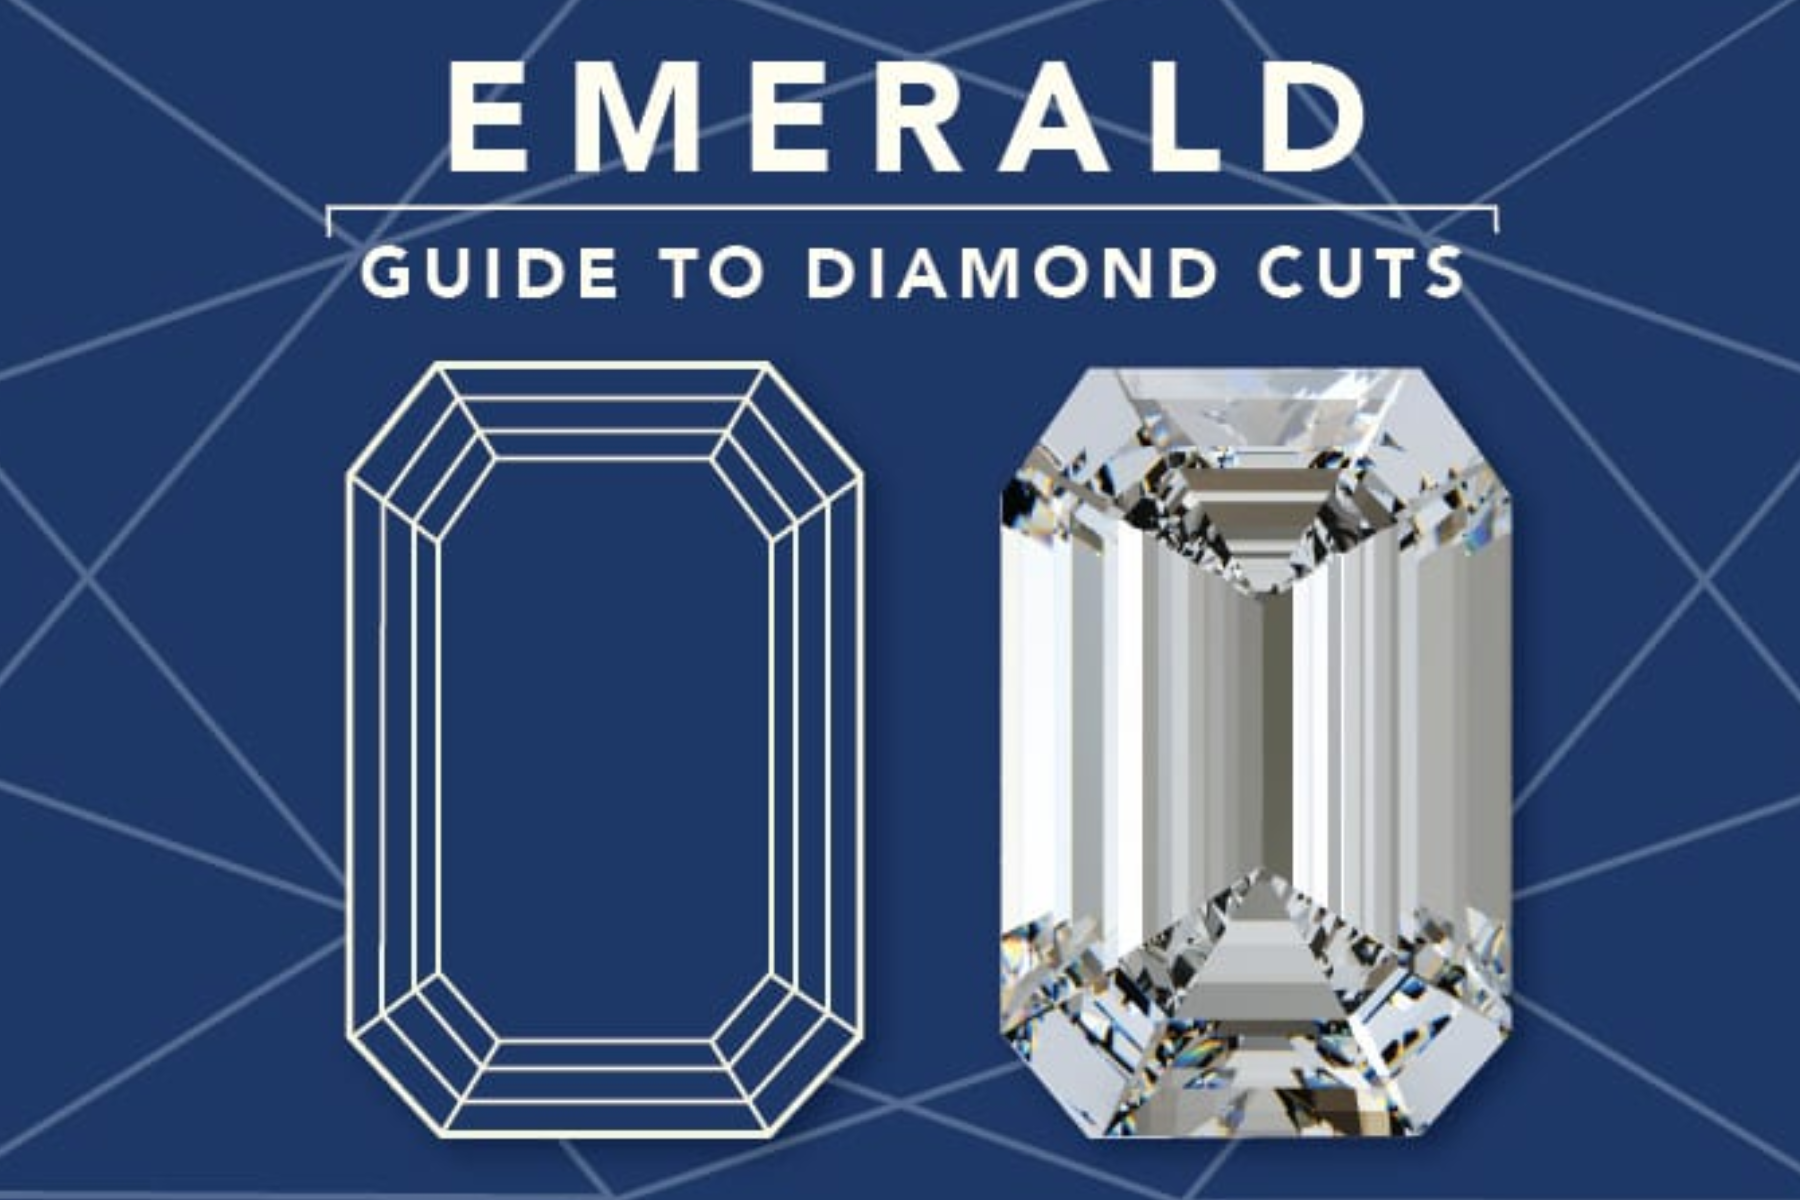 An emerald cut diamond, showcasing its distinct outline and the diamond itself